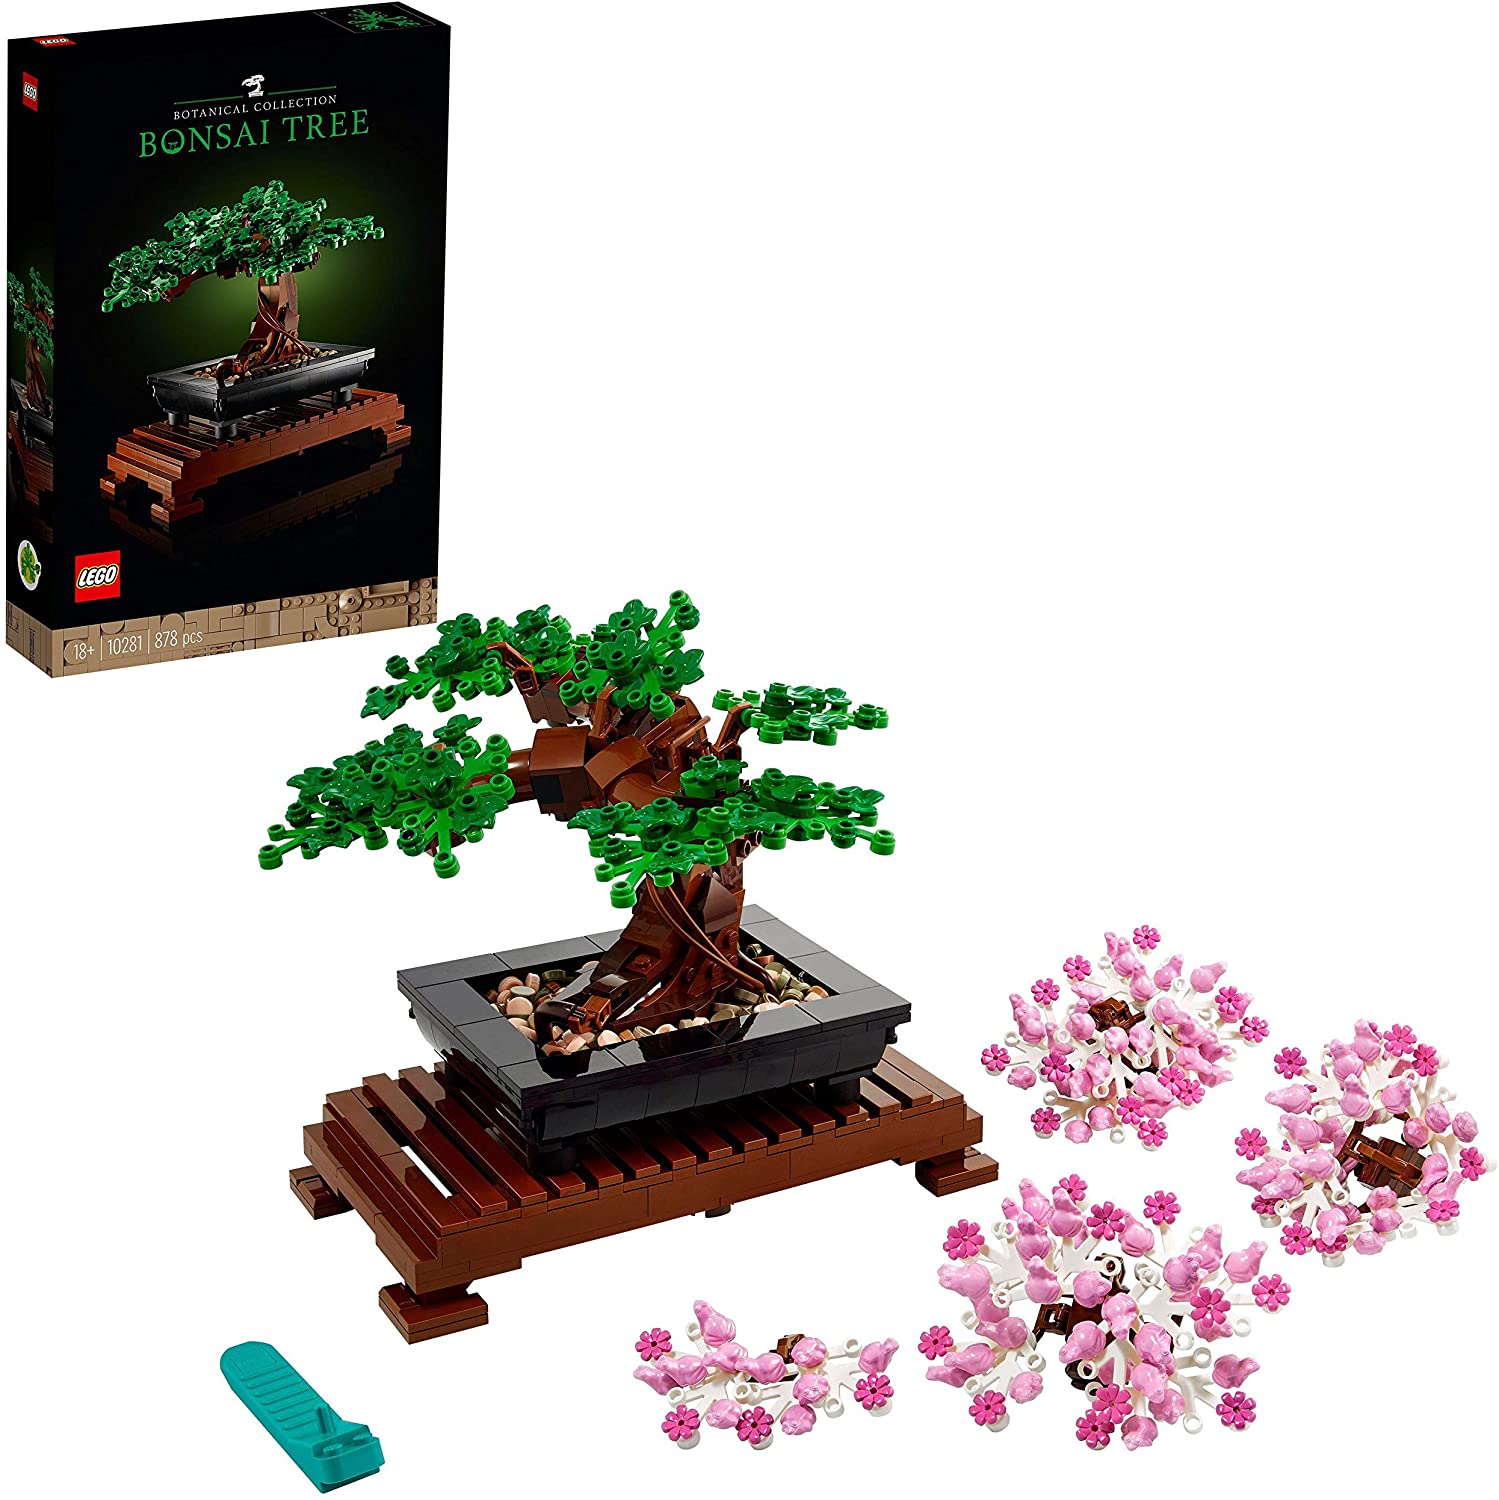 Lego 10281 Creator Expert “Bonsai Tree” Set, Adult Home Decor, DYI Projects